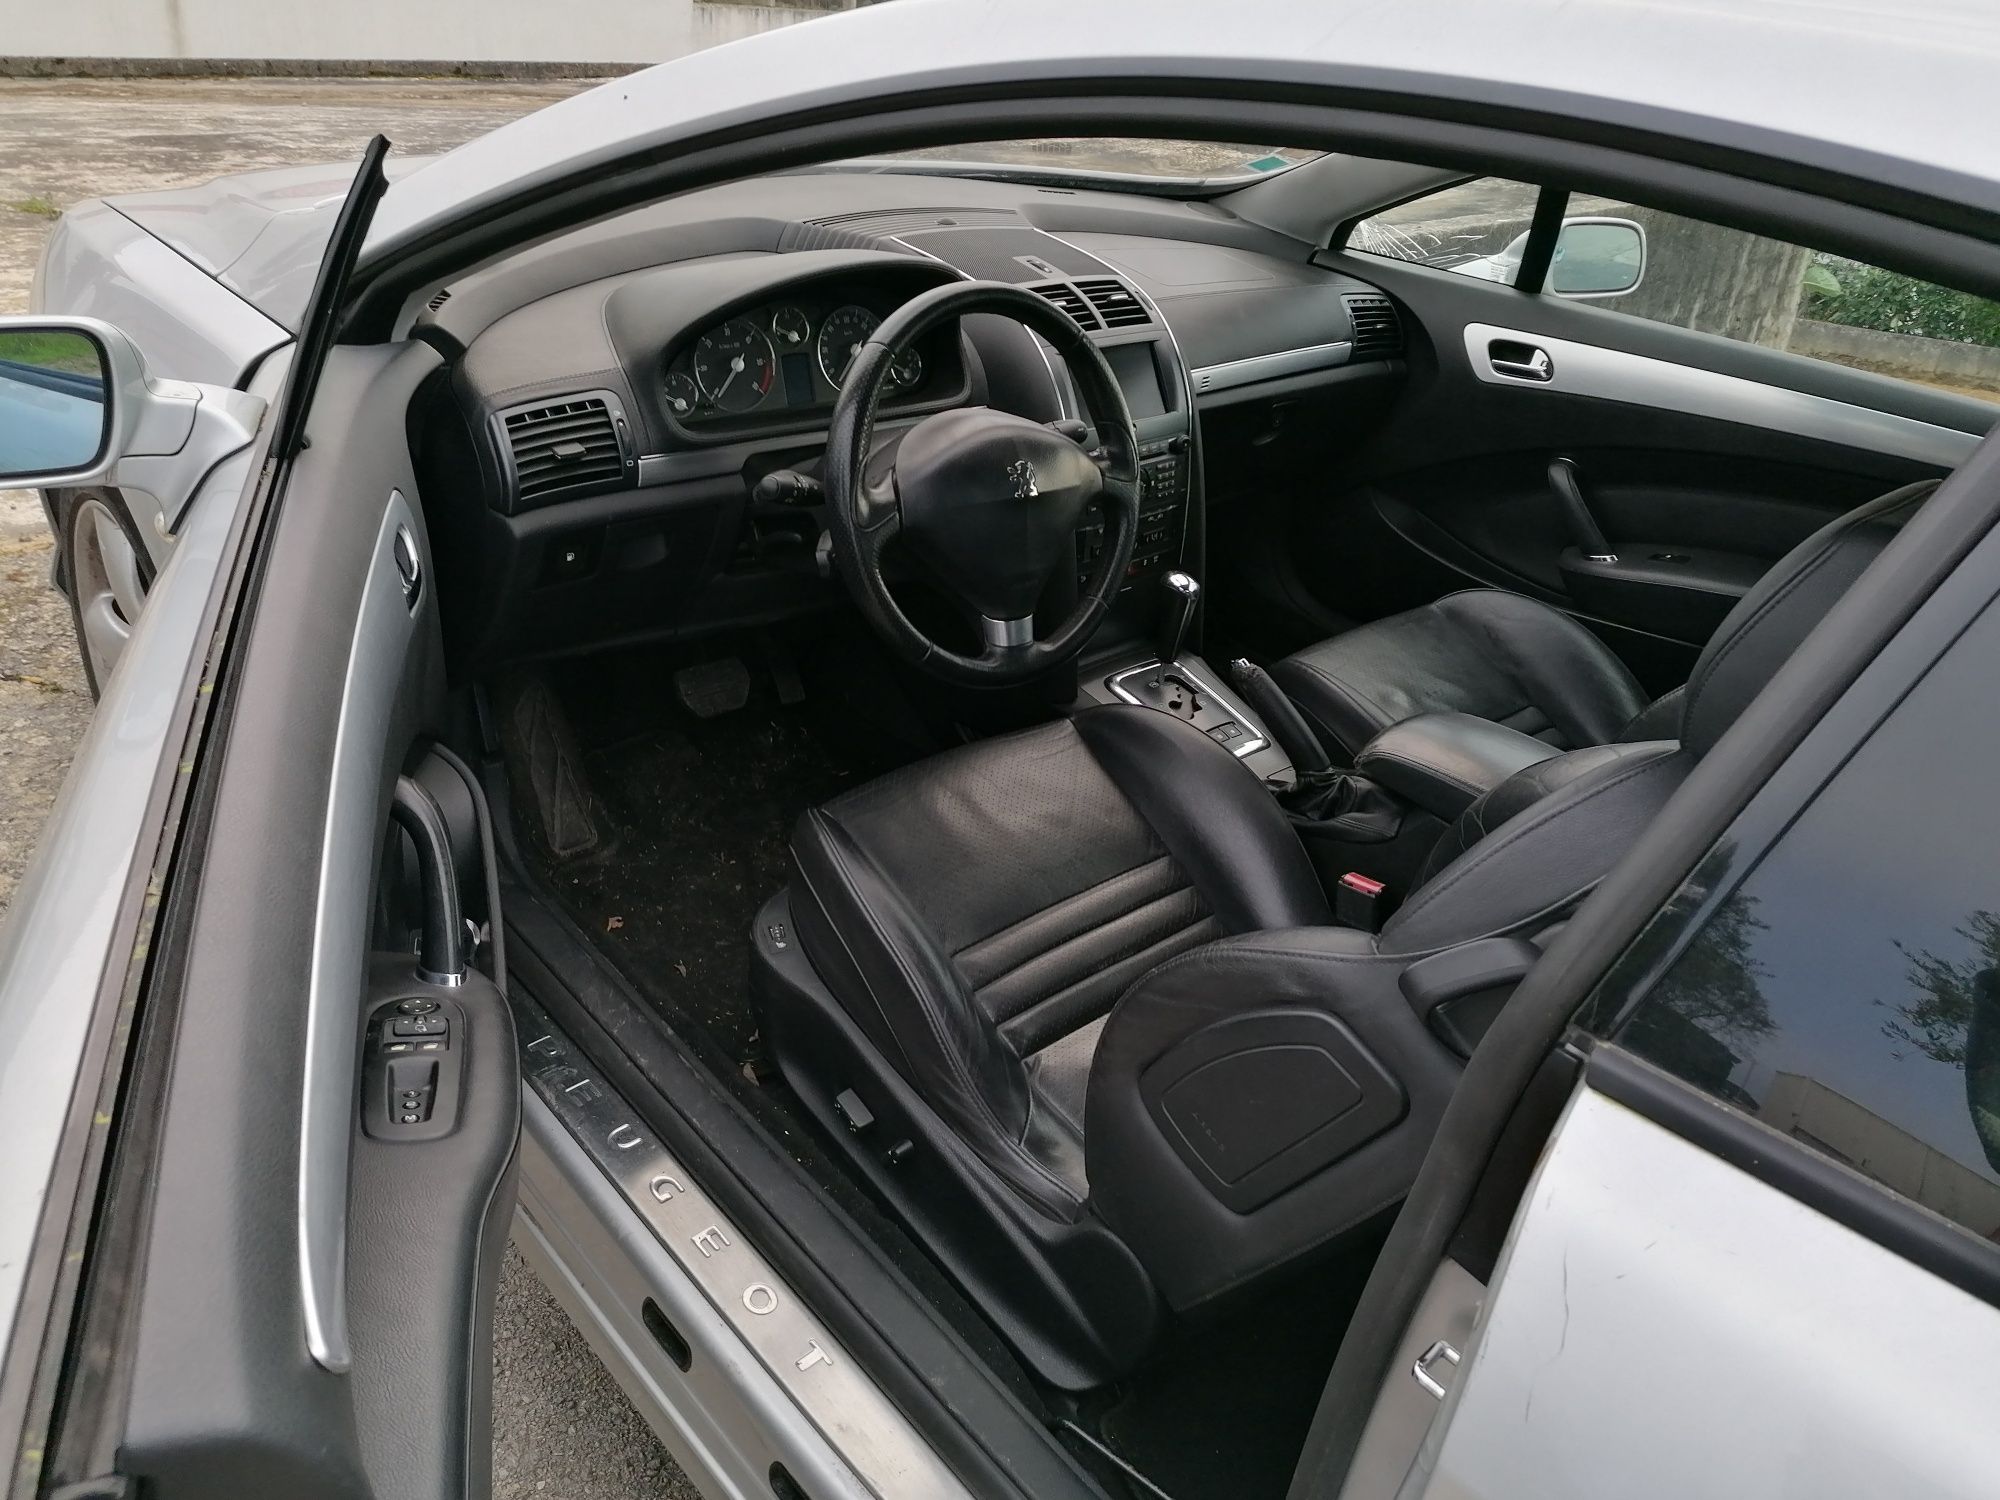 Interior em pele Peugeot 407 coupe